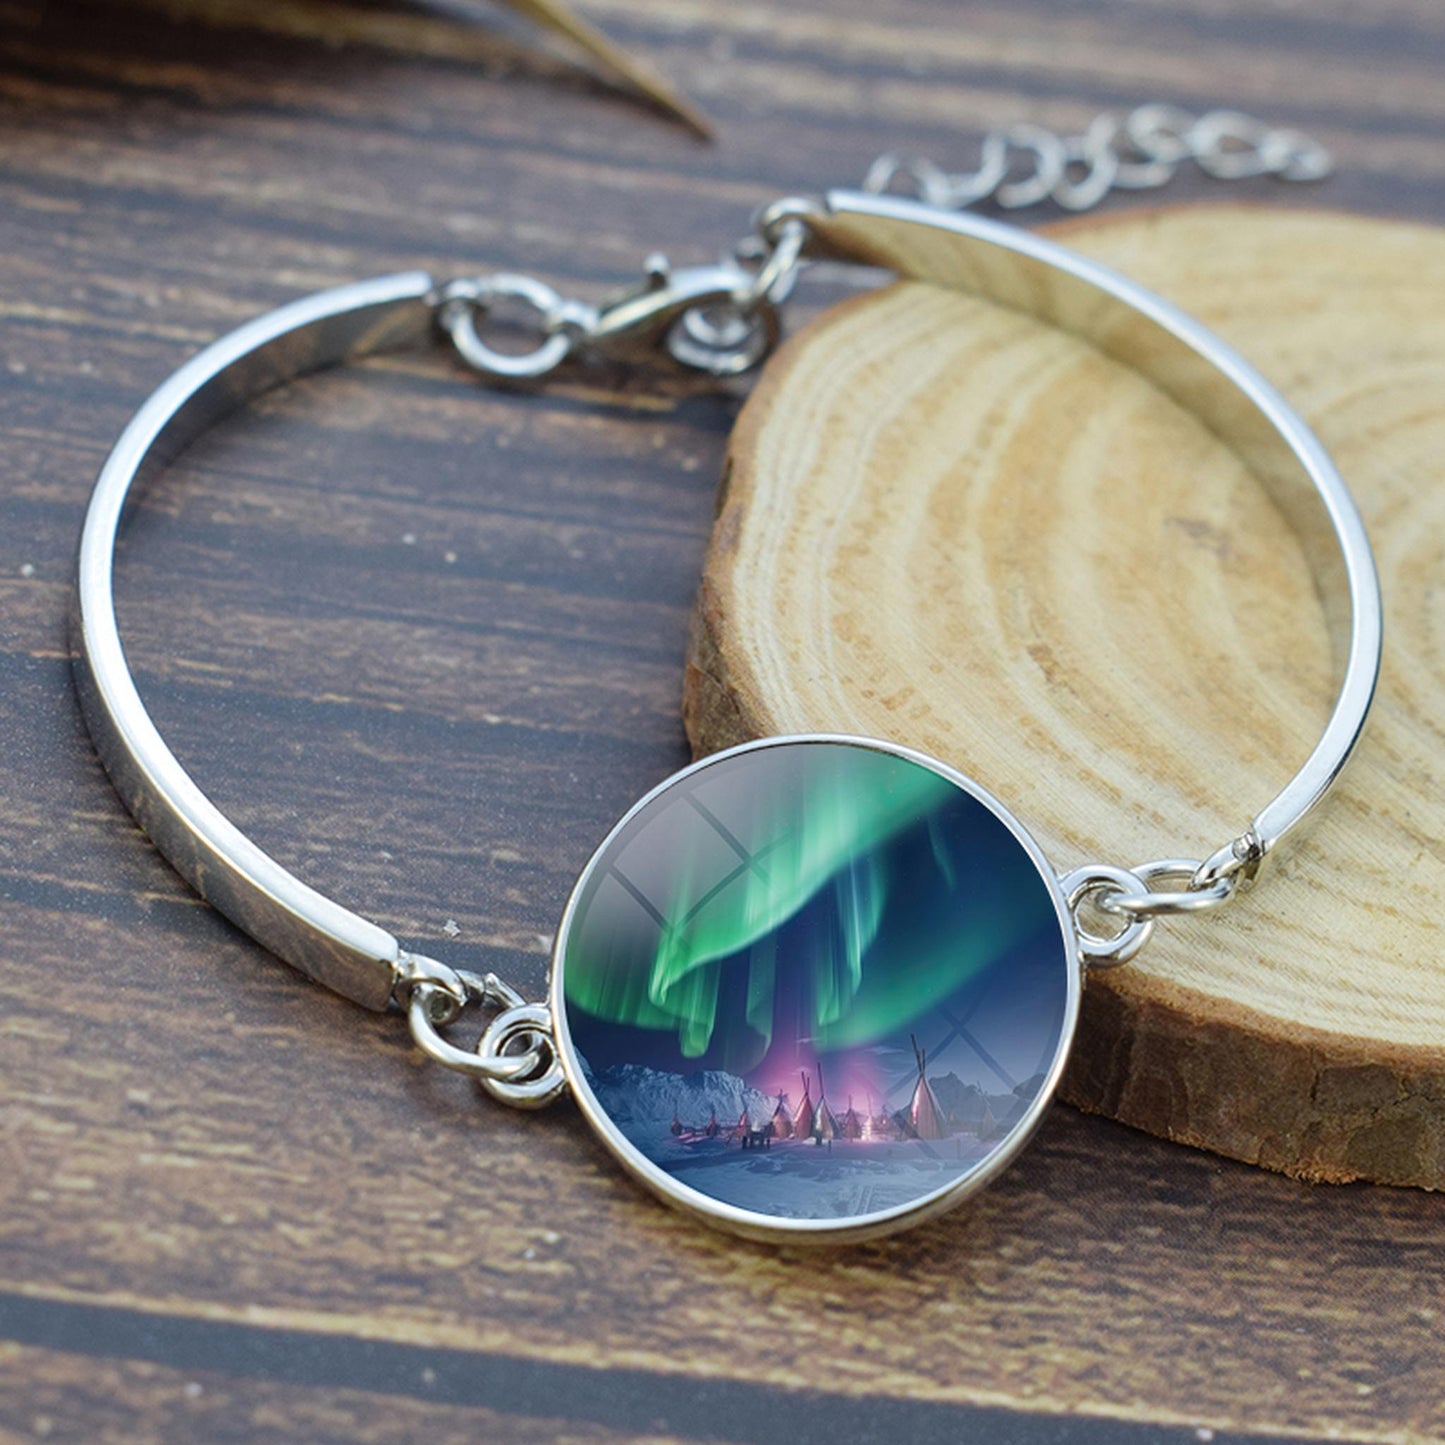 Unique Aurora Borealis Bangle Bracelet - Northern Light Jewelry - Glass Cabochon Silver Plated Bracelet - Perfect Aurora Lovers Gift 9